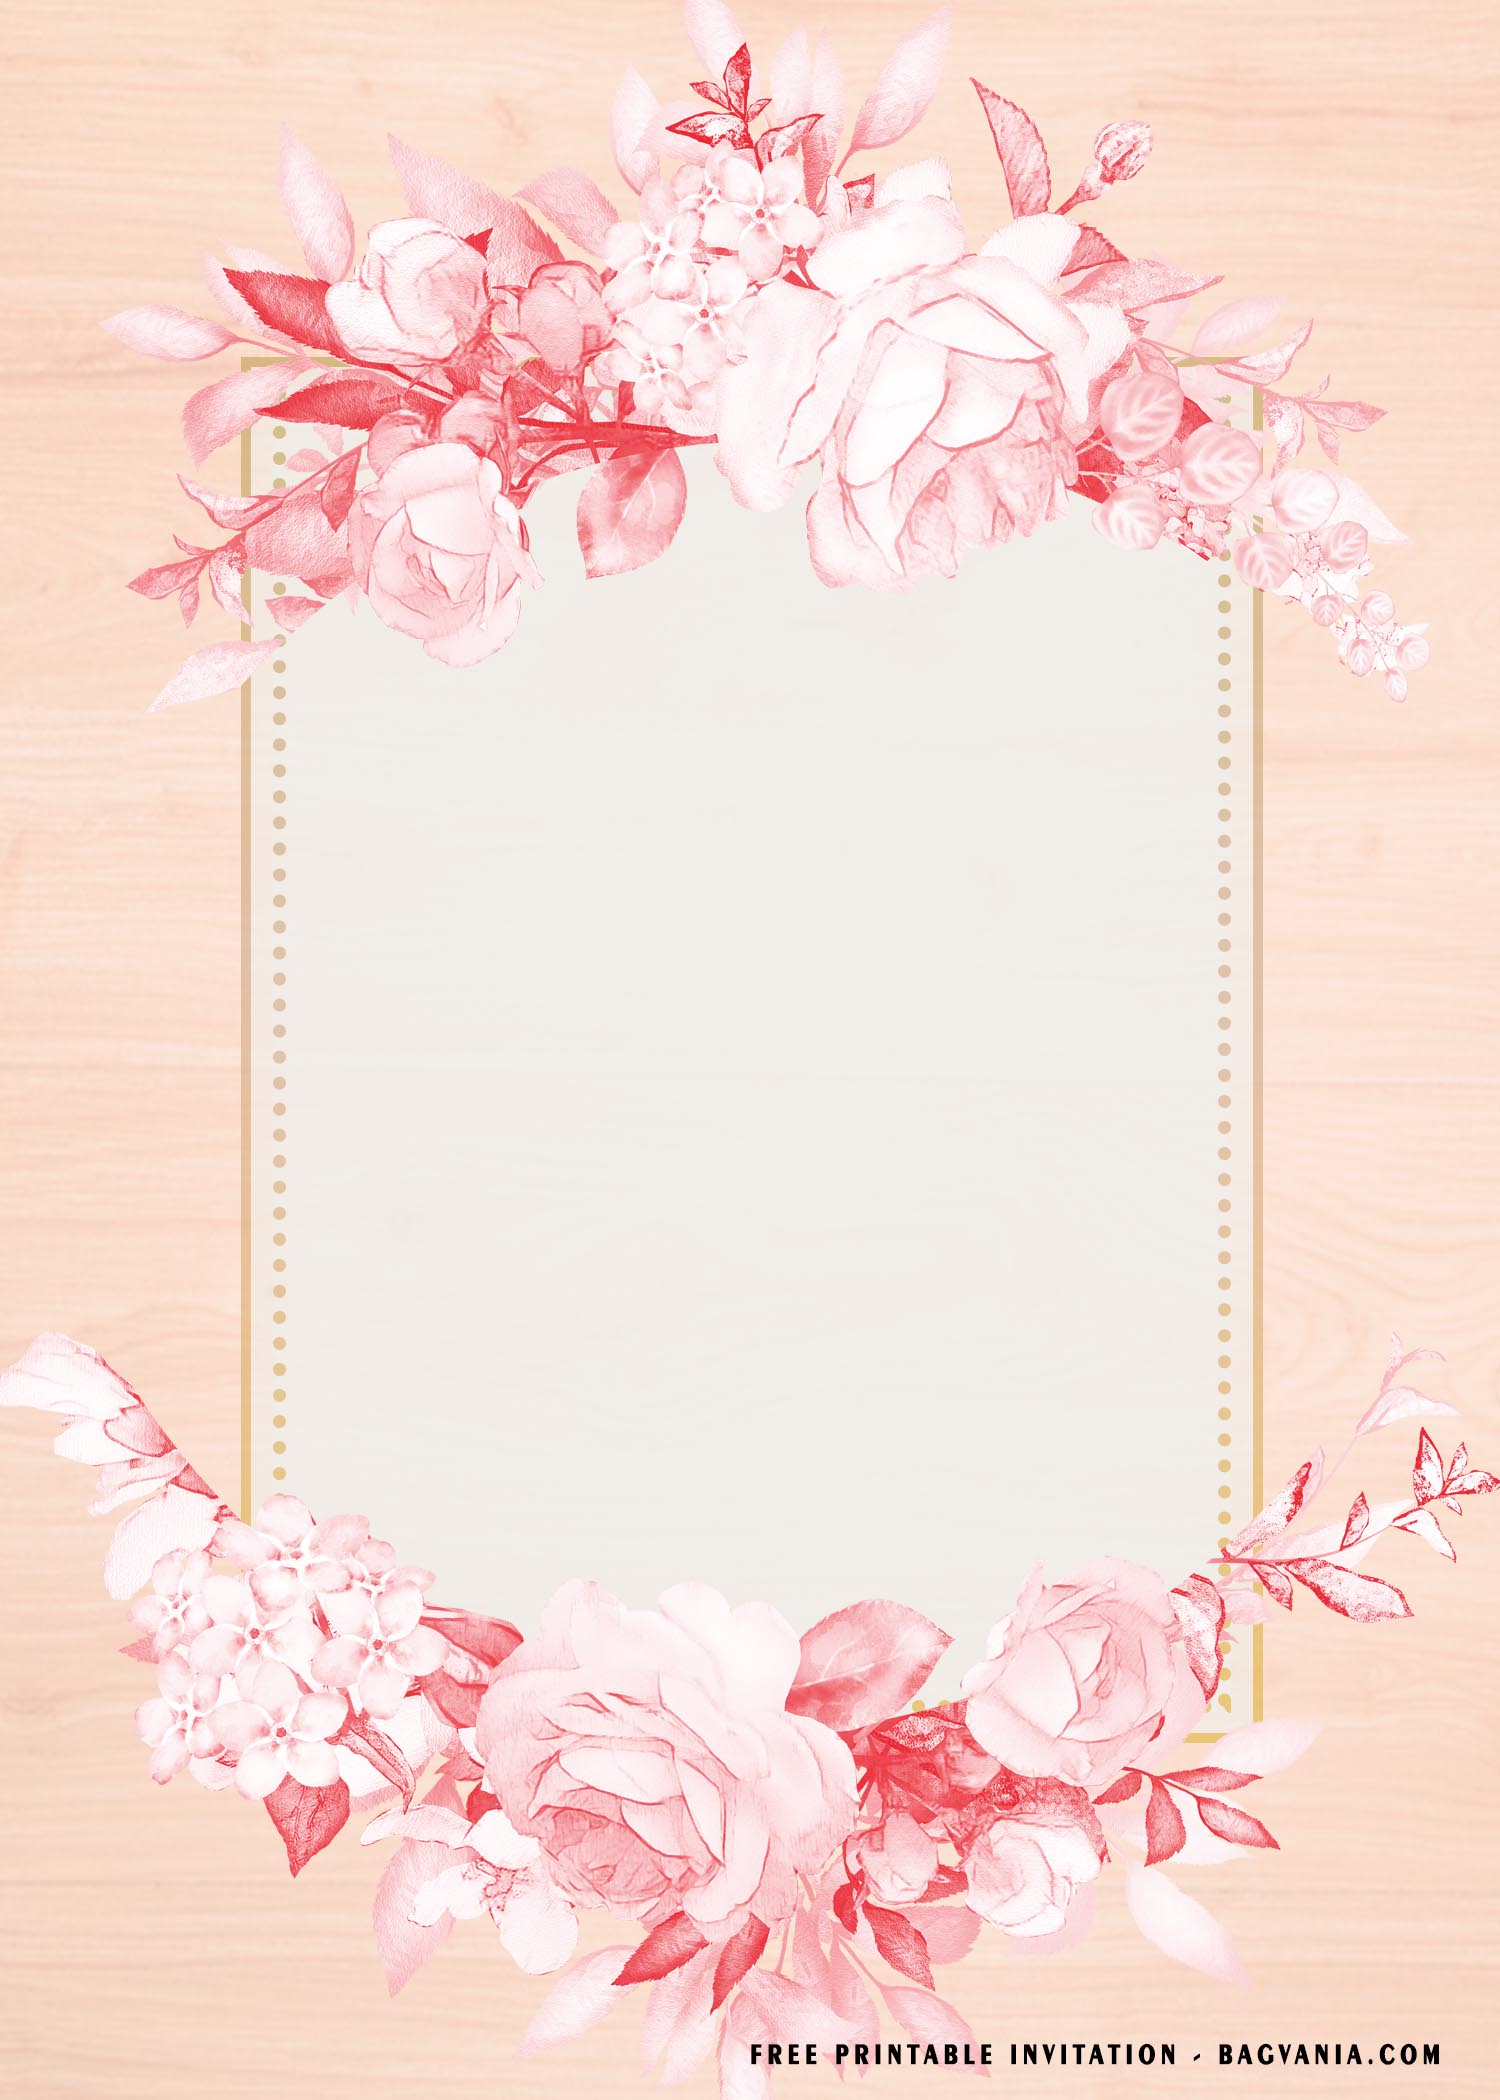 FREE Printable) – Pink Flower Gold Frame Baby Shower Invitation Templates |  FREE Printable Birthday Invitation Templates - Bagvania